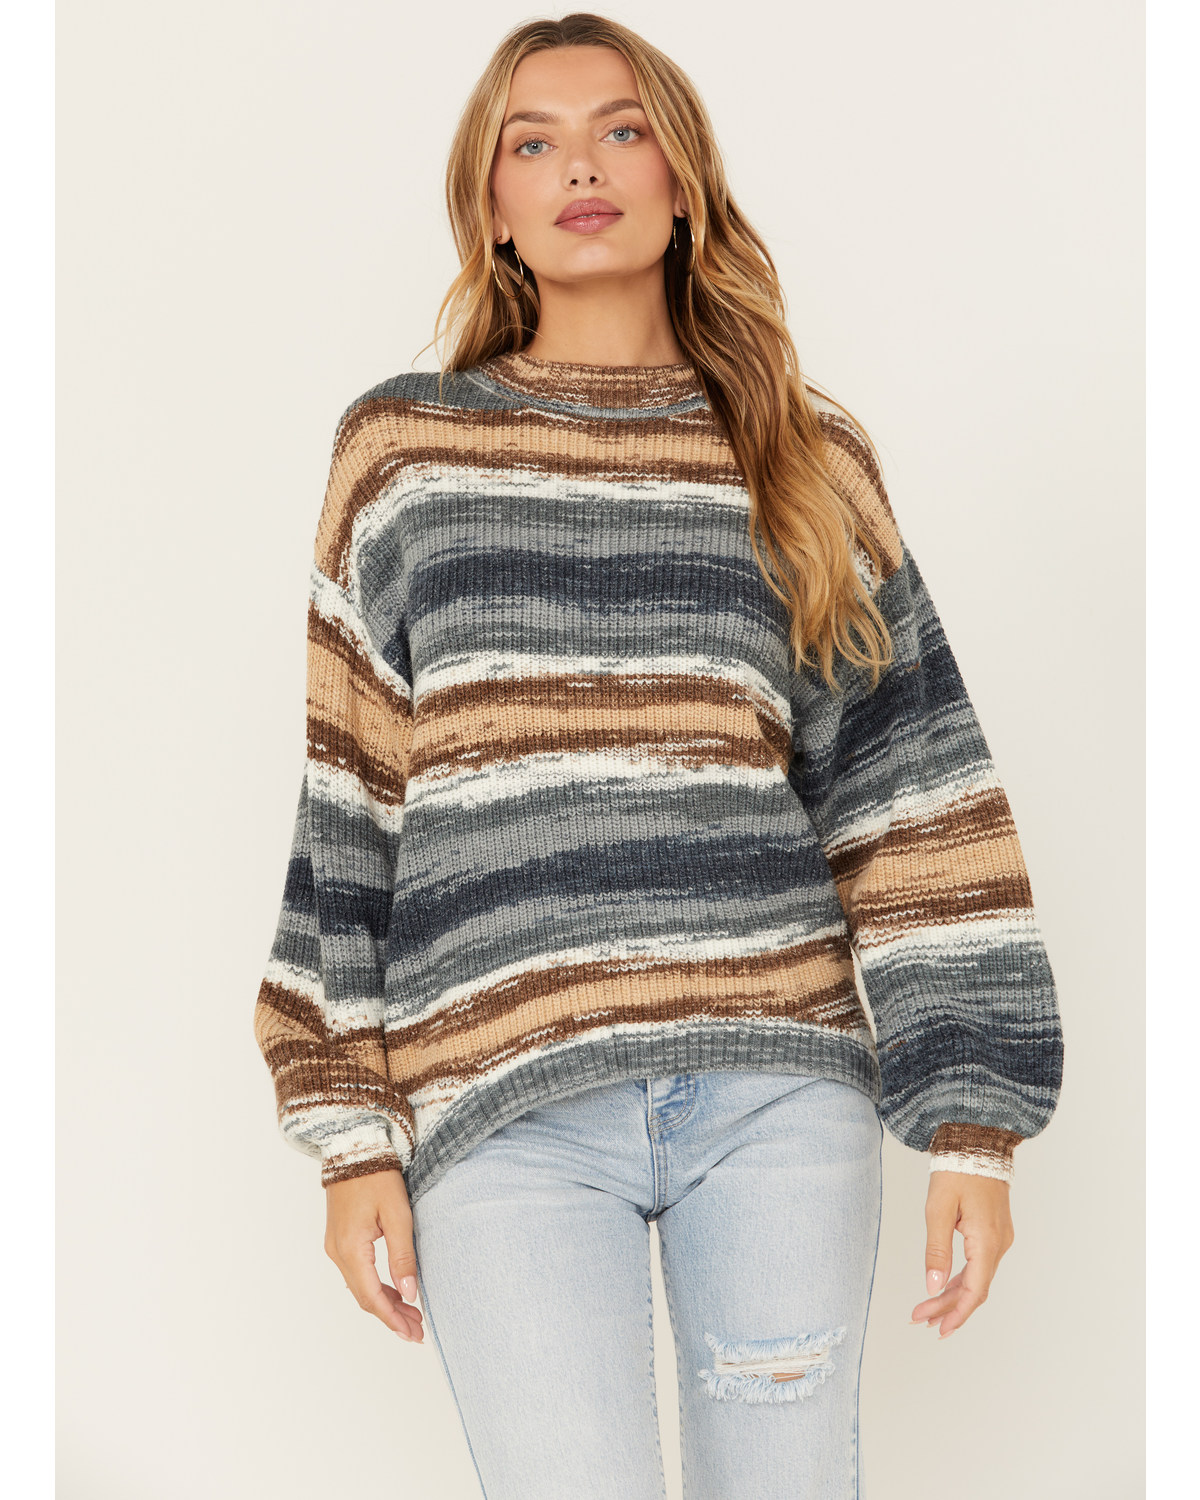 Cleo + Wolf Women's Striped Oversized Sweater